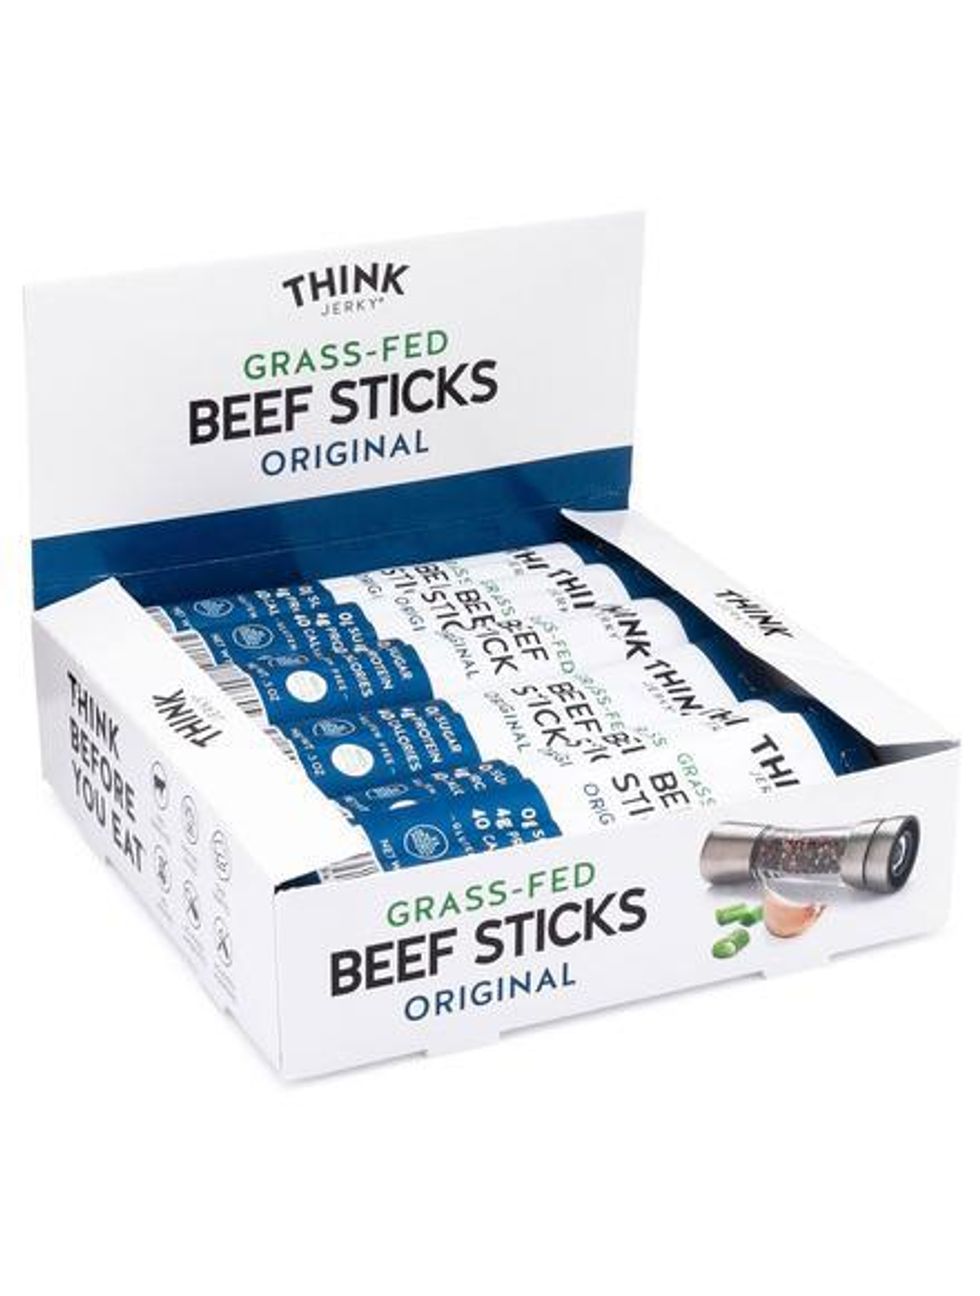 Think Jerky Grass-Fed Beef Sticks